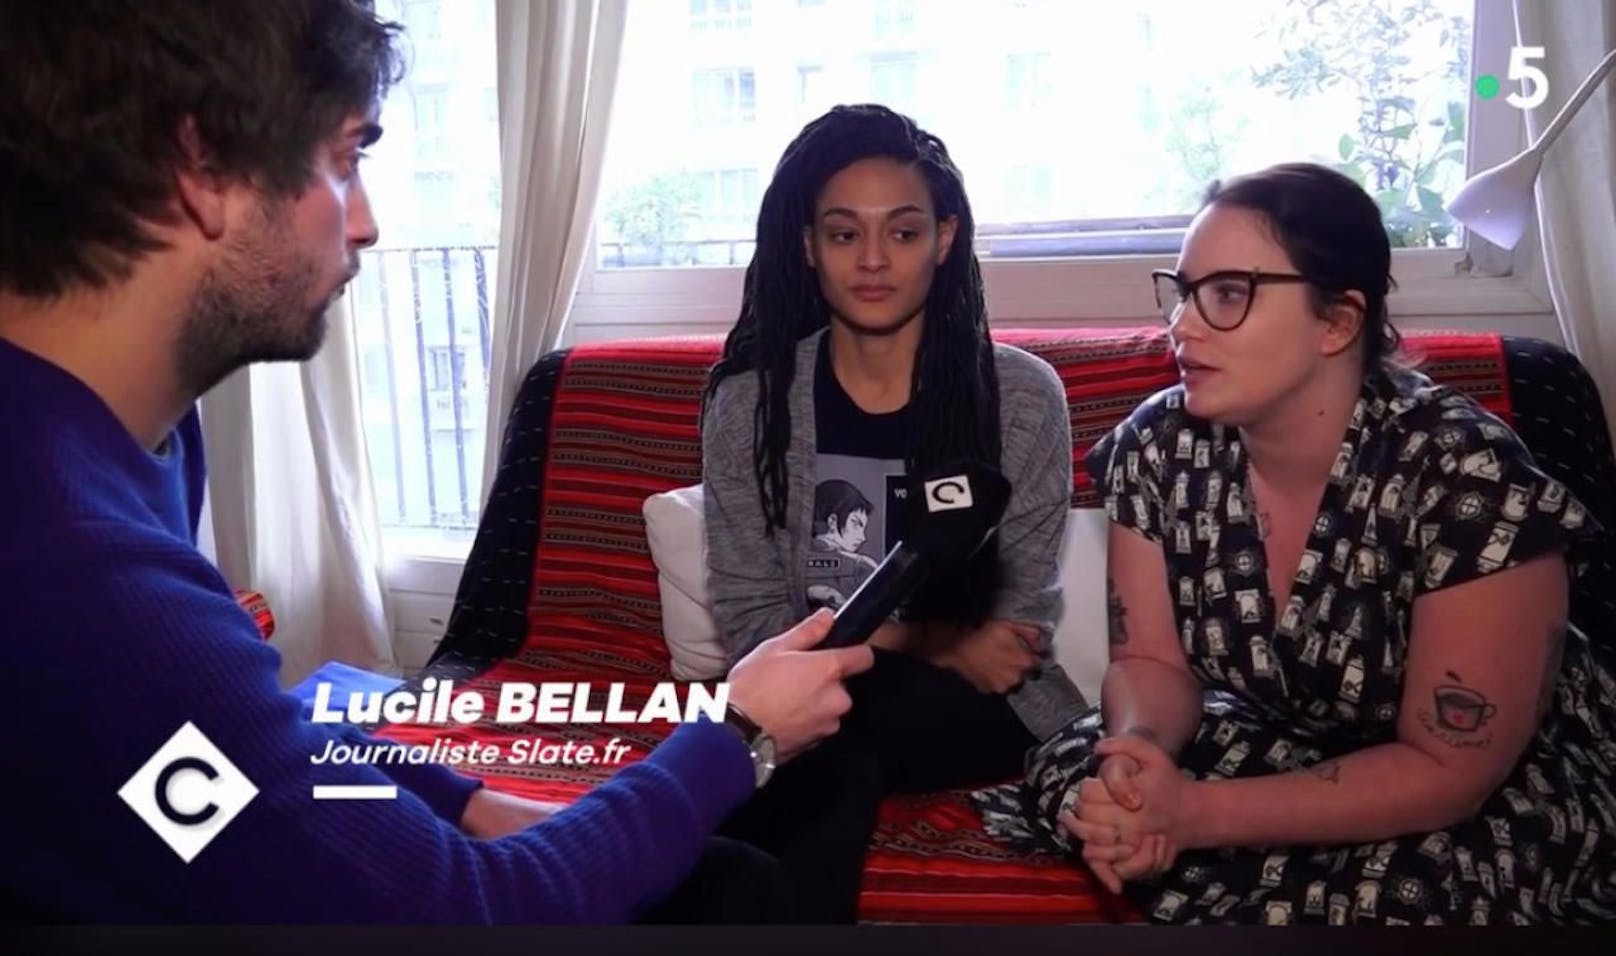 Melania Wanga und Lucile Bellan im Interview.